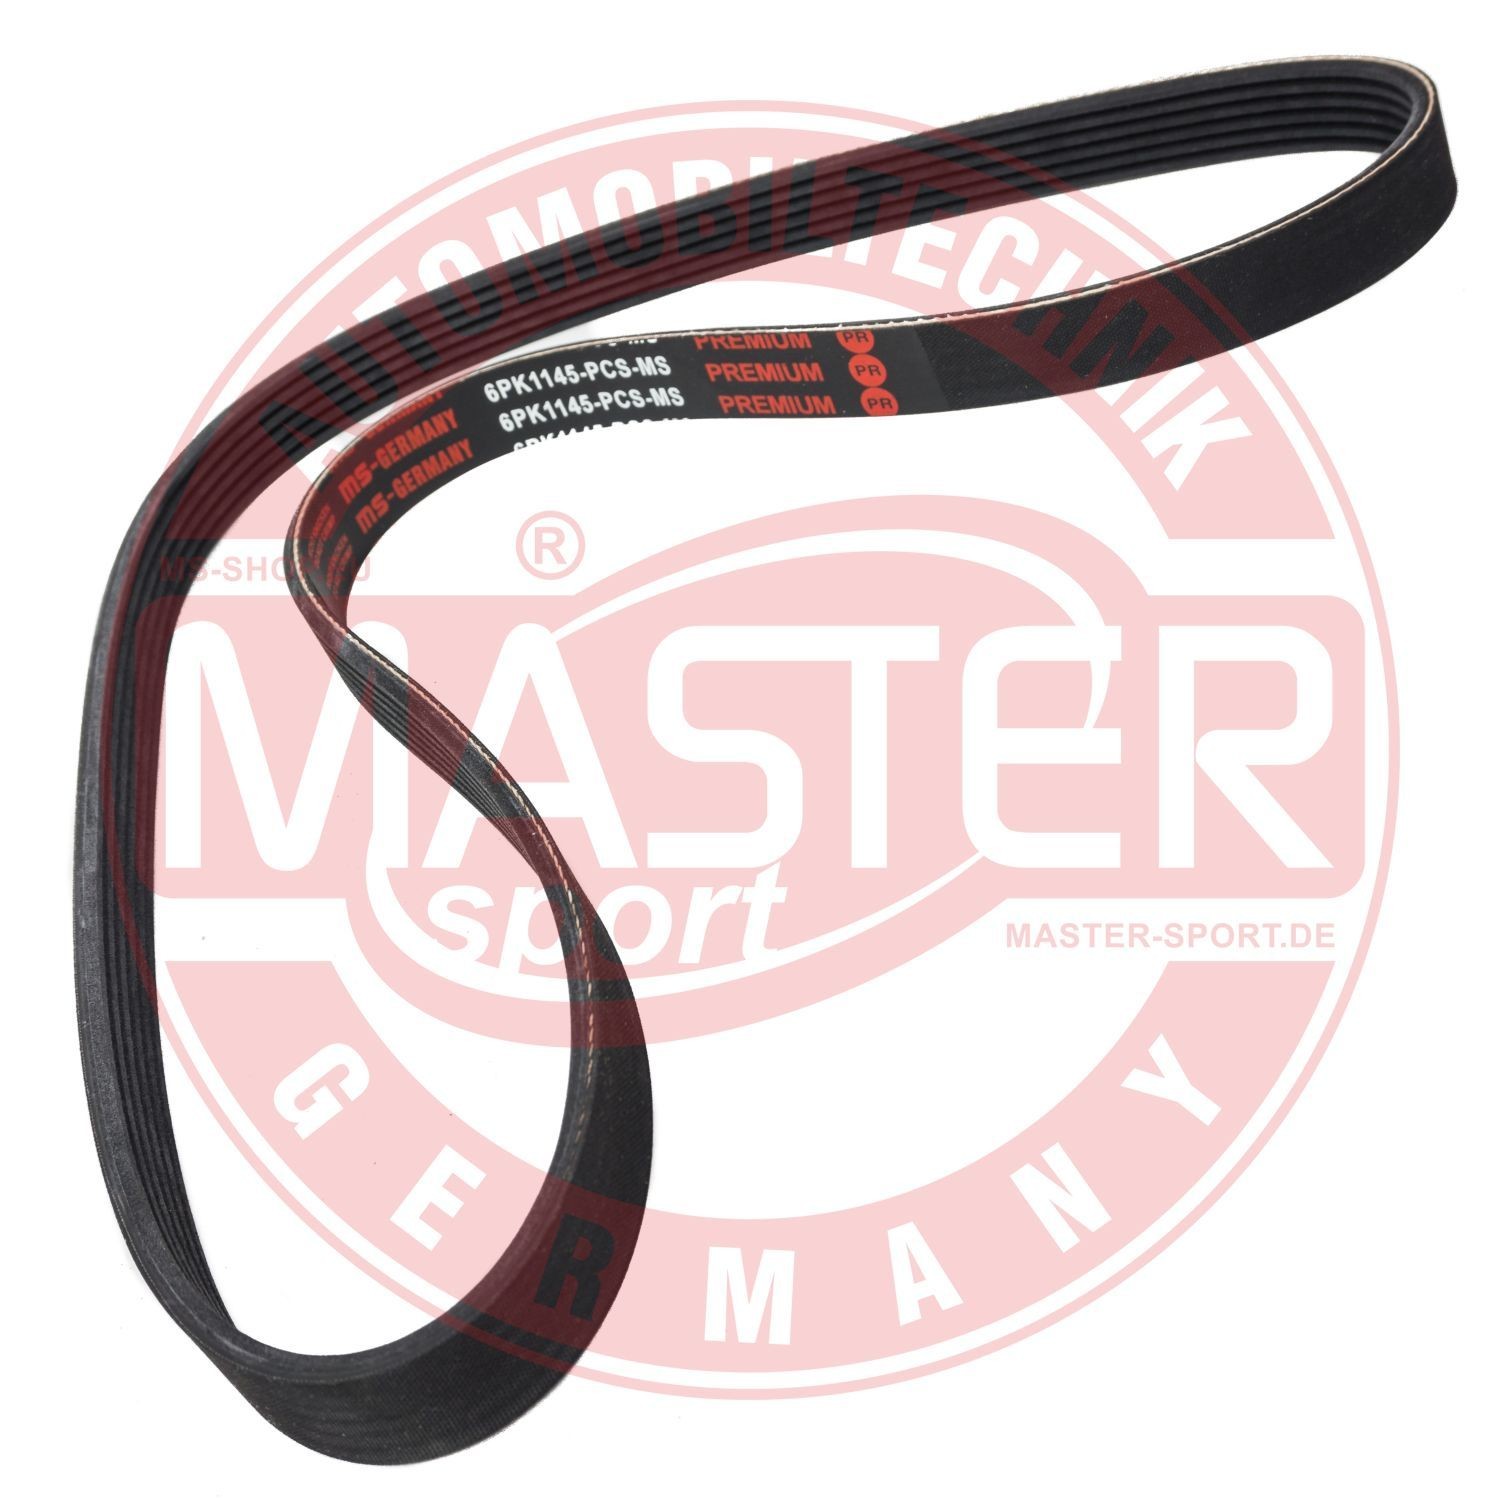 MASTER-SPORT 6PK1145-PCS-MS Serpentine belt 1145mm, 6